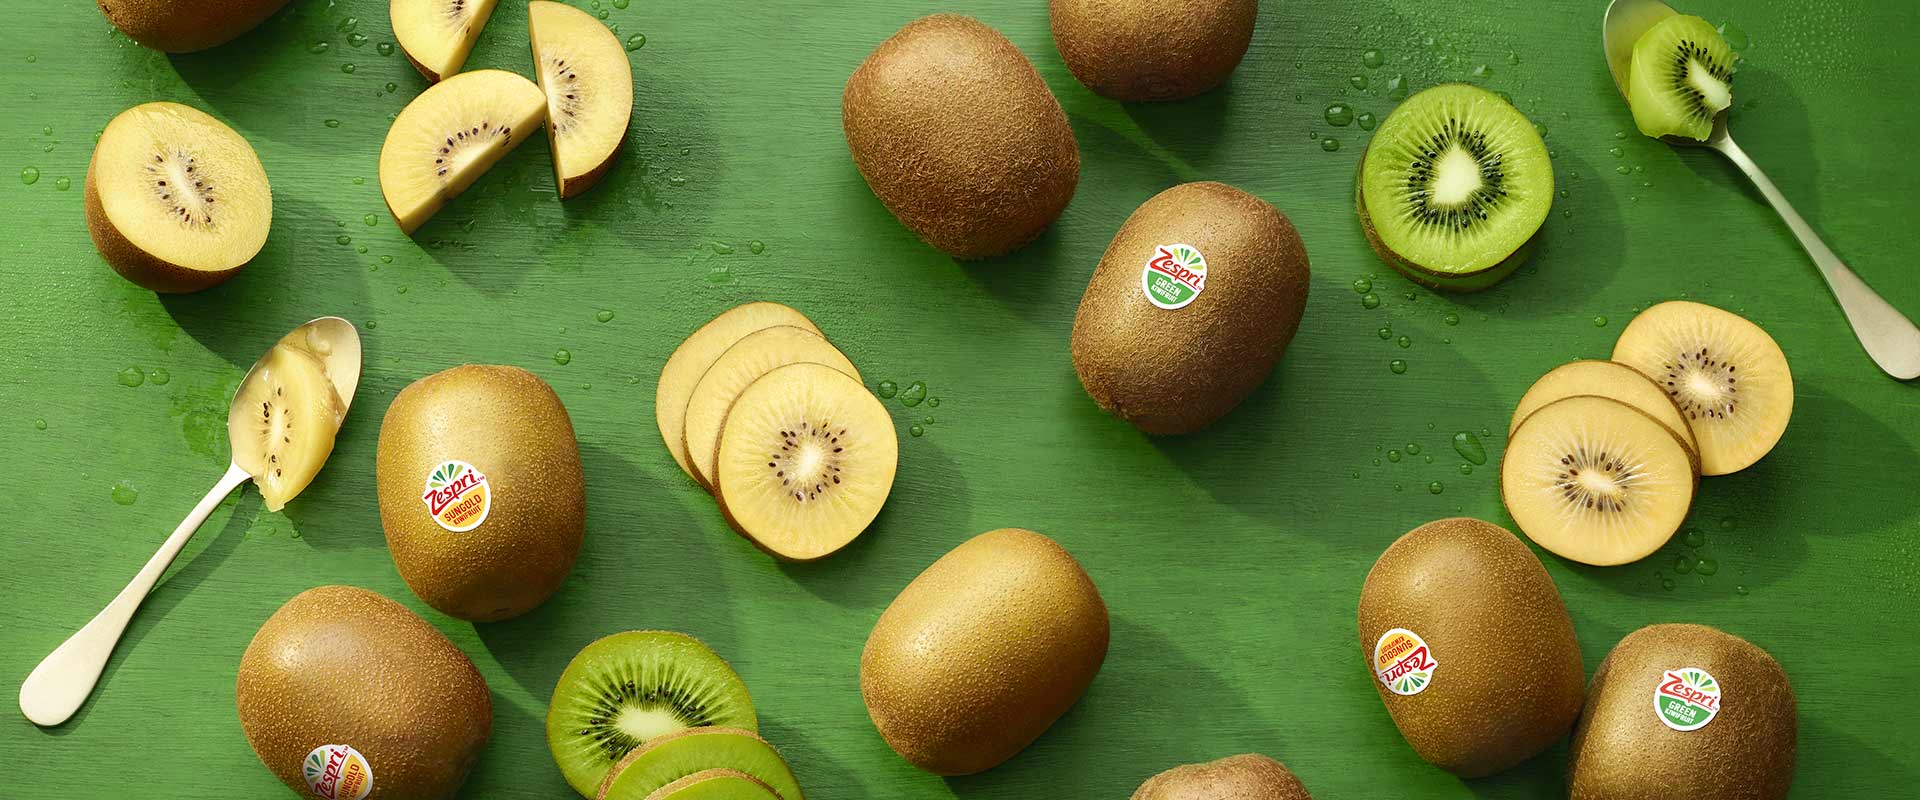 10 Properties and Benefits of Kiwifruit - Header